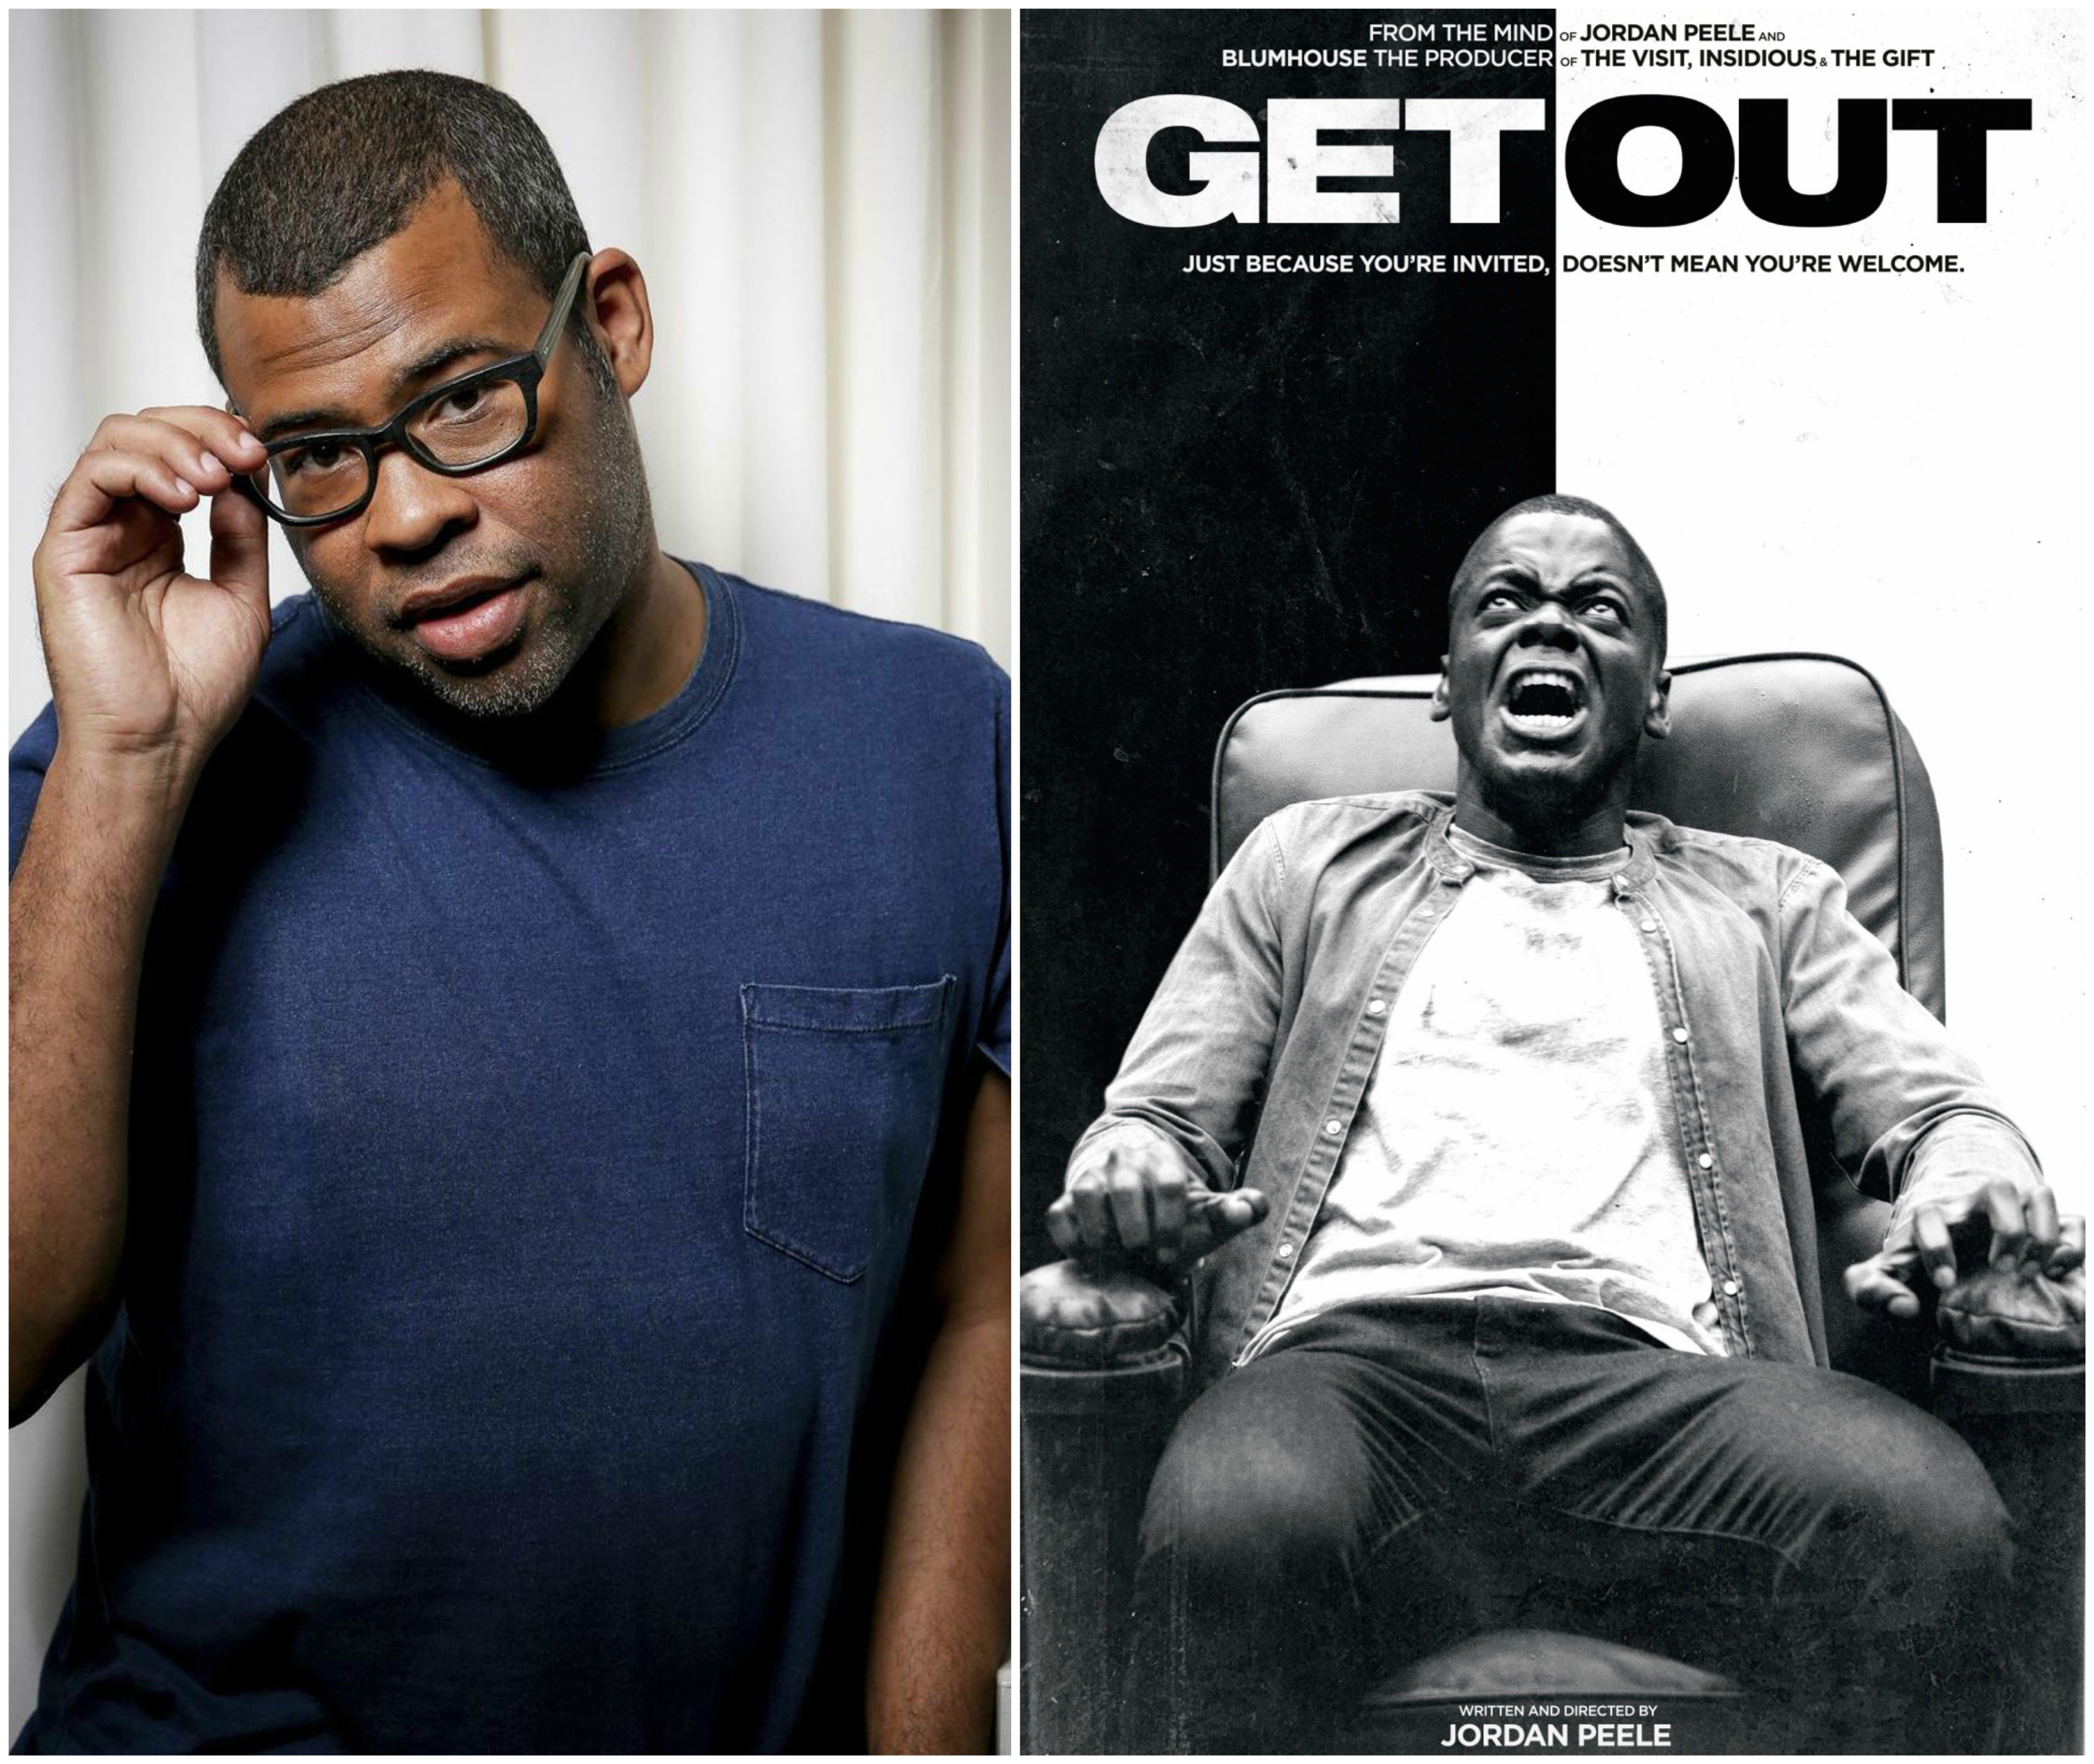 “Get Out” Starring Daniel Kaluuya Wins Oscars Award for Best Original Screenplay